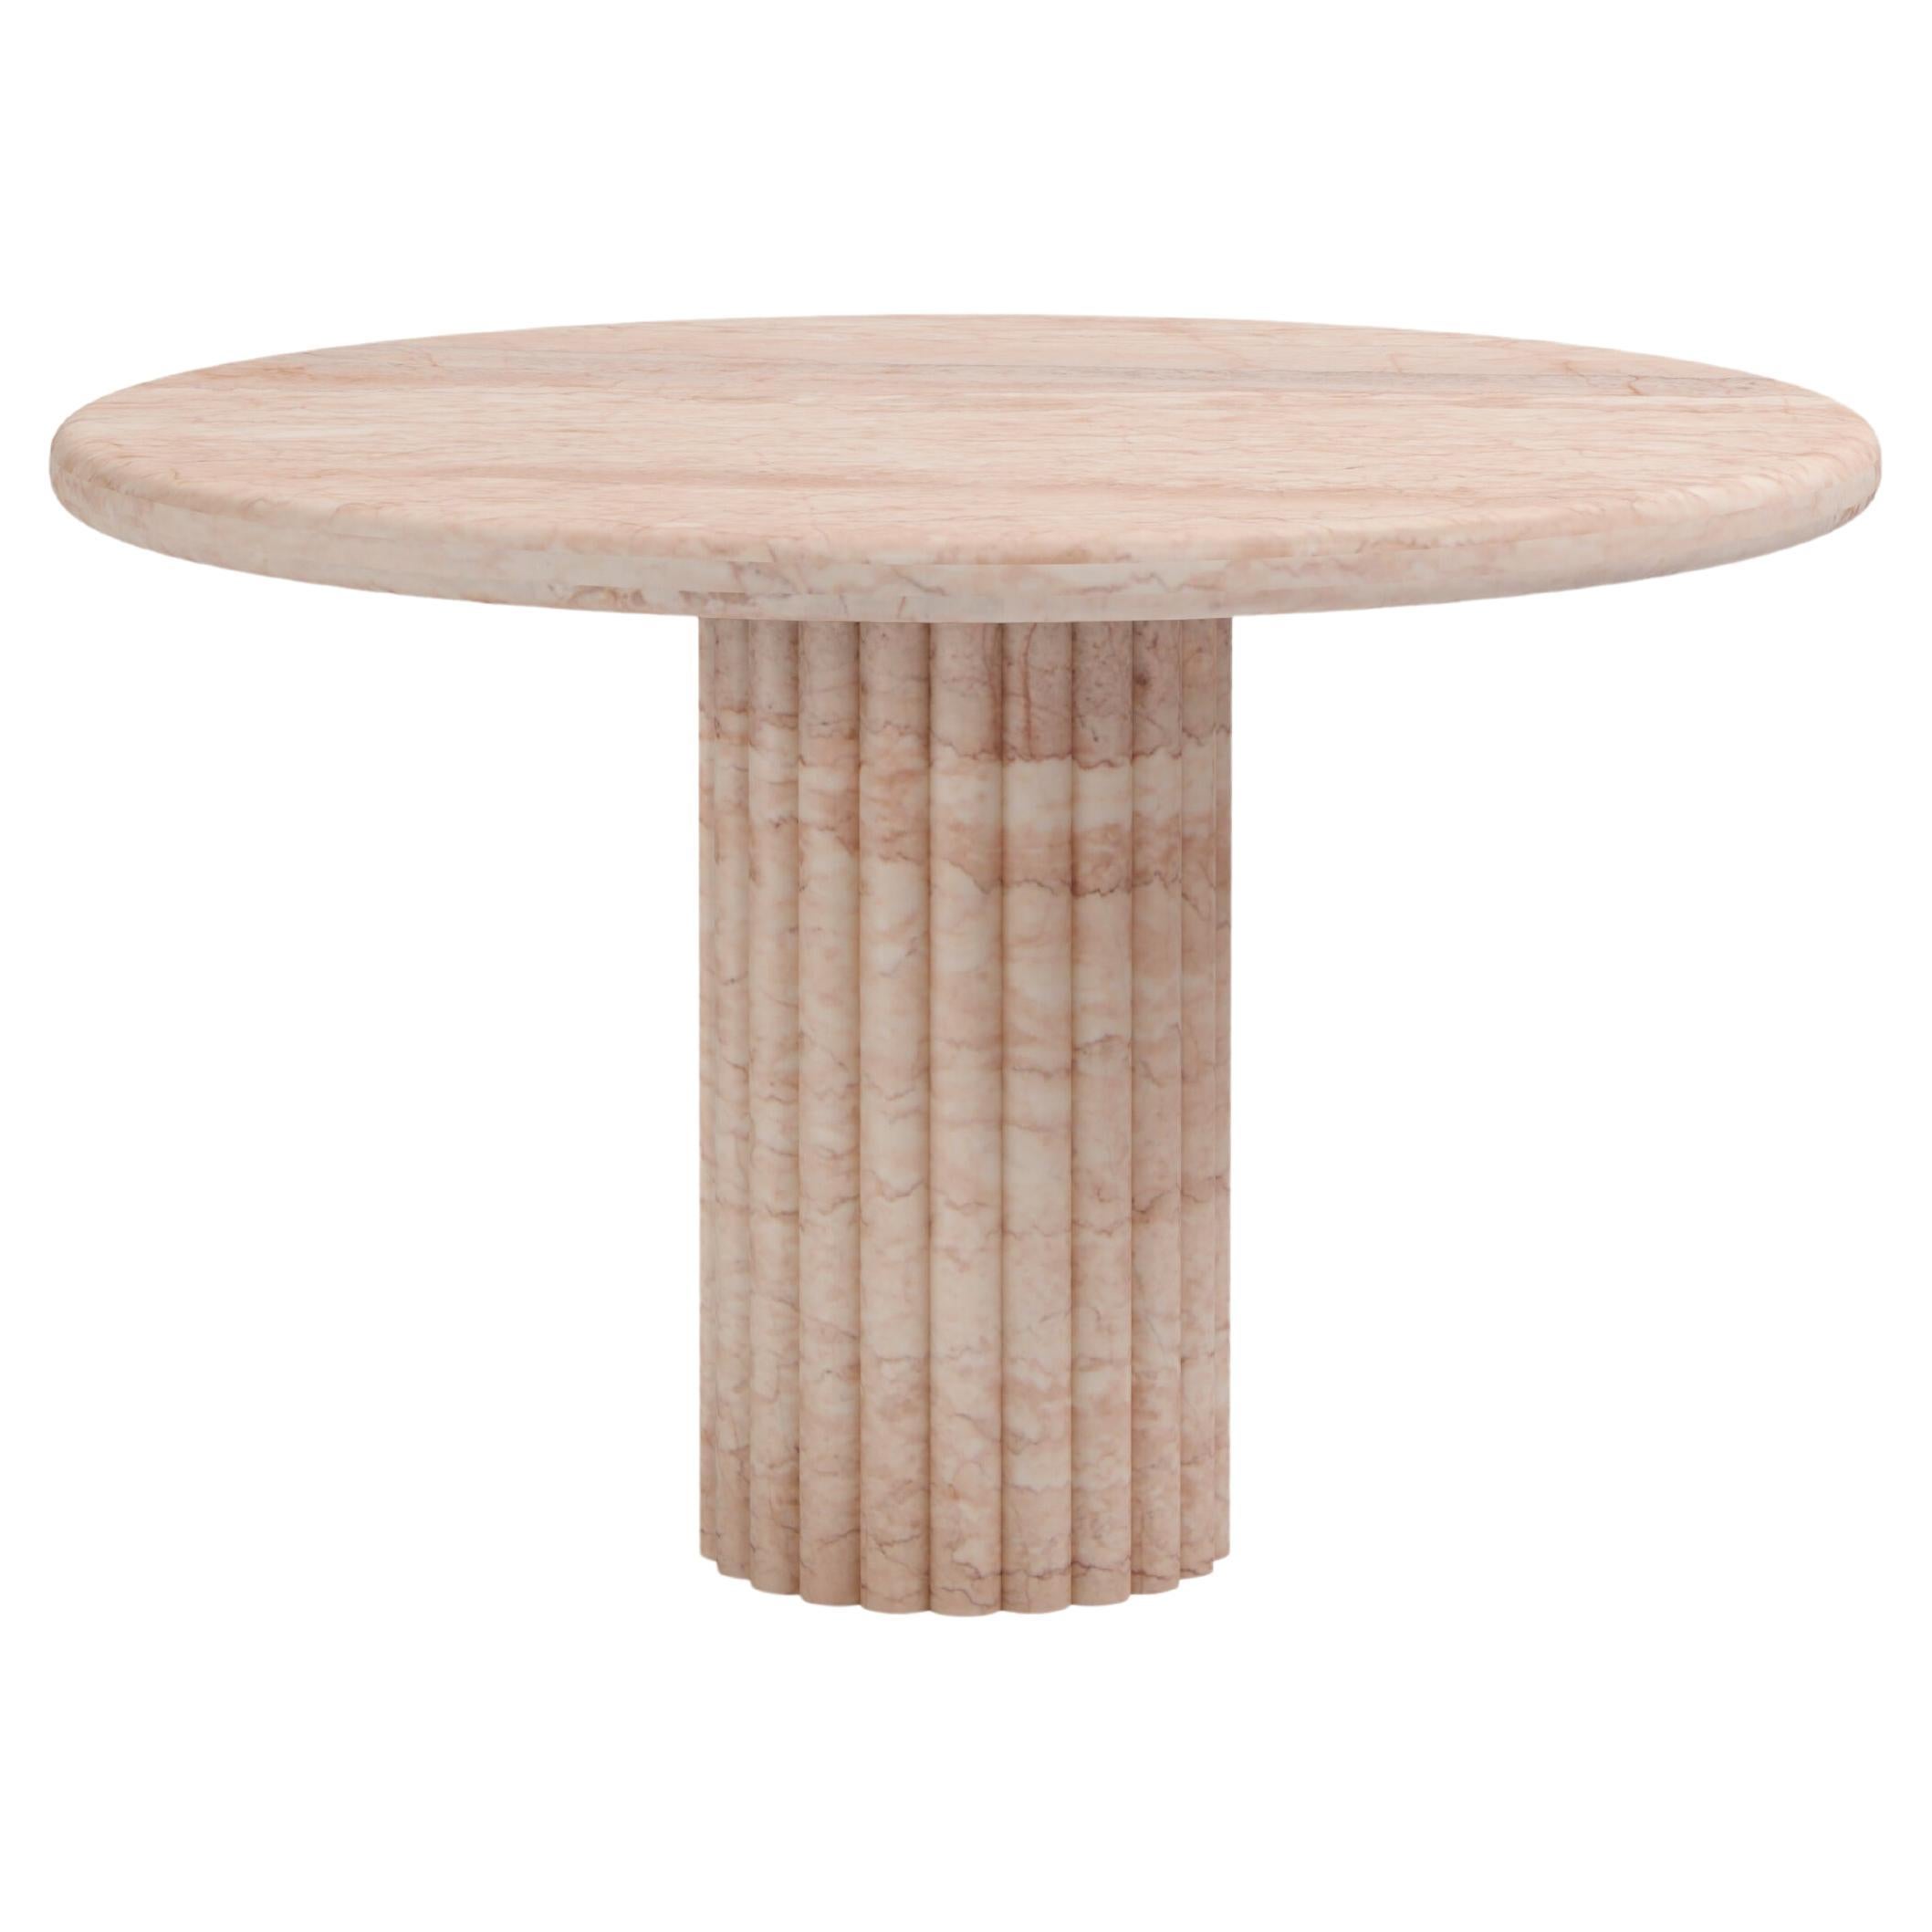 FORM(LA) Fluta Round Dining Table 36”L x 36”W x 30”H Rosa Crema Marble For Sale